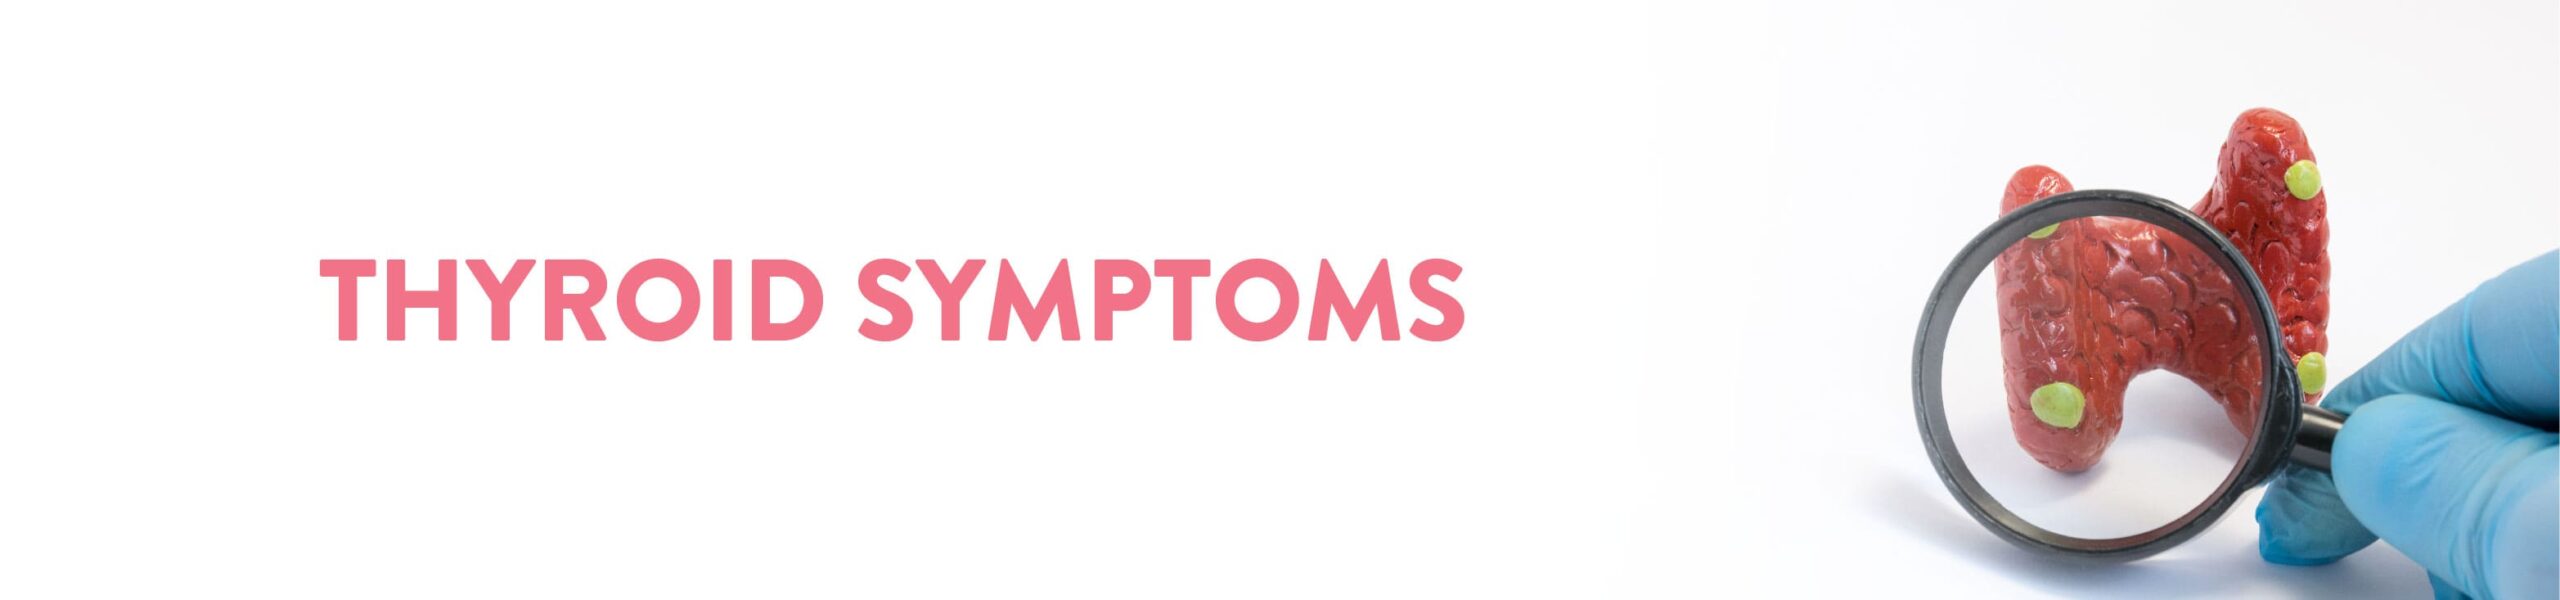 THYROID SYMPTOMS